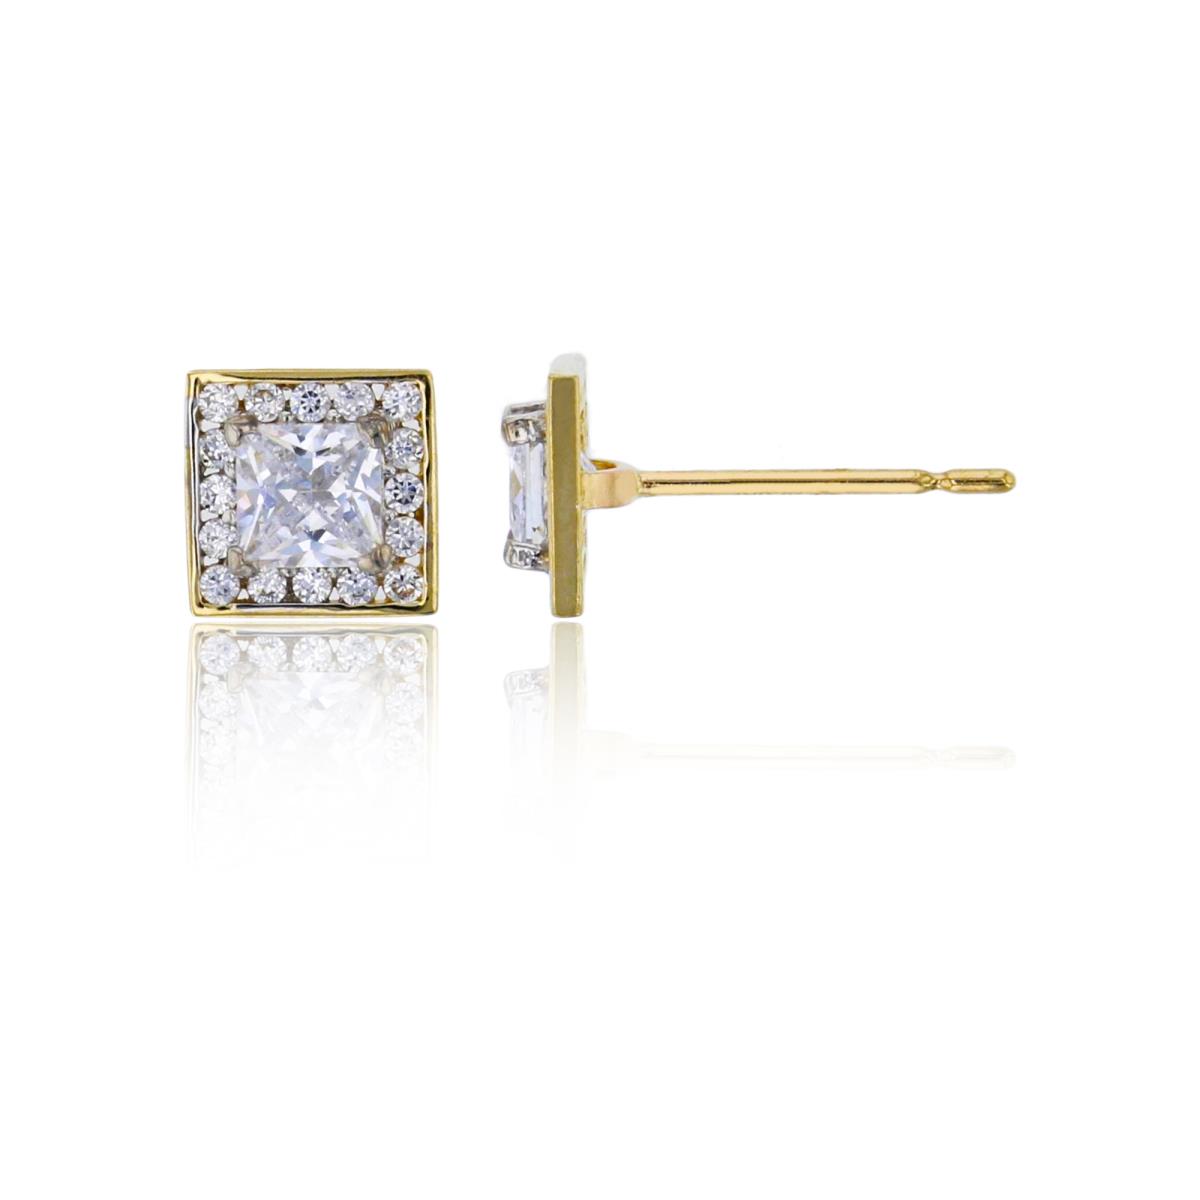 14K Two-Tone Gold 3.5mm Princess Cut Square Stud Earring